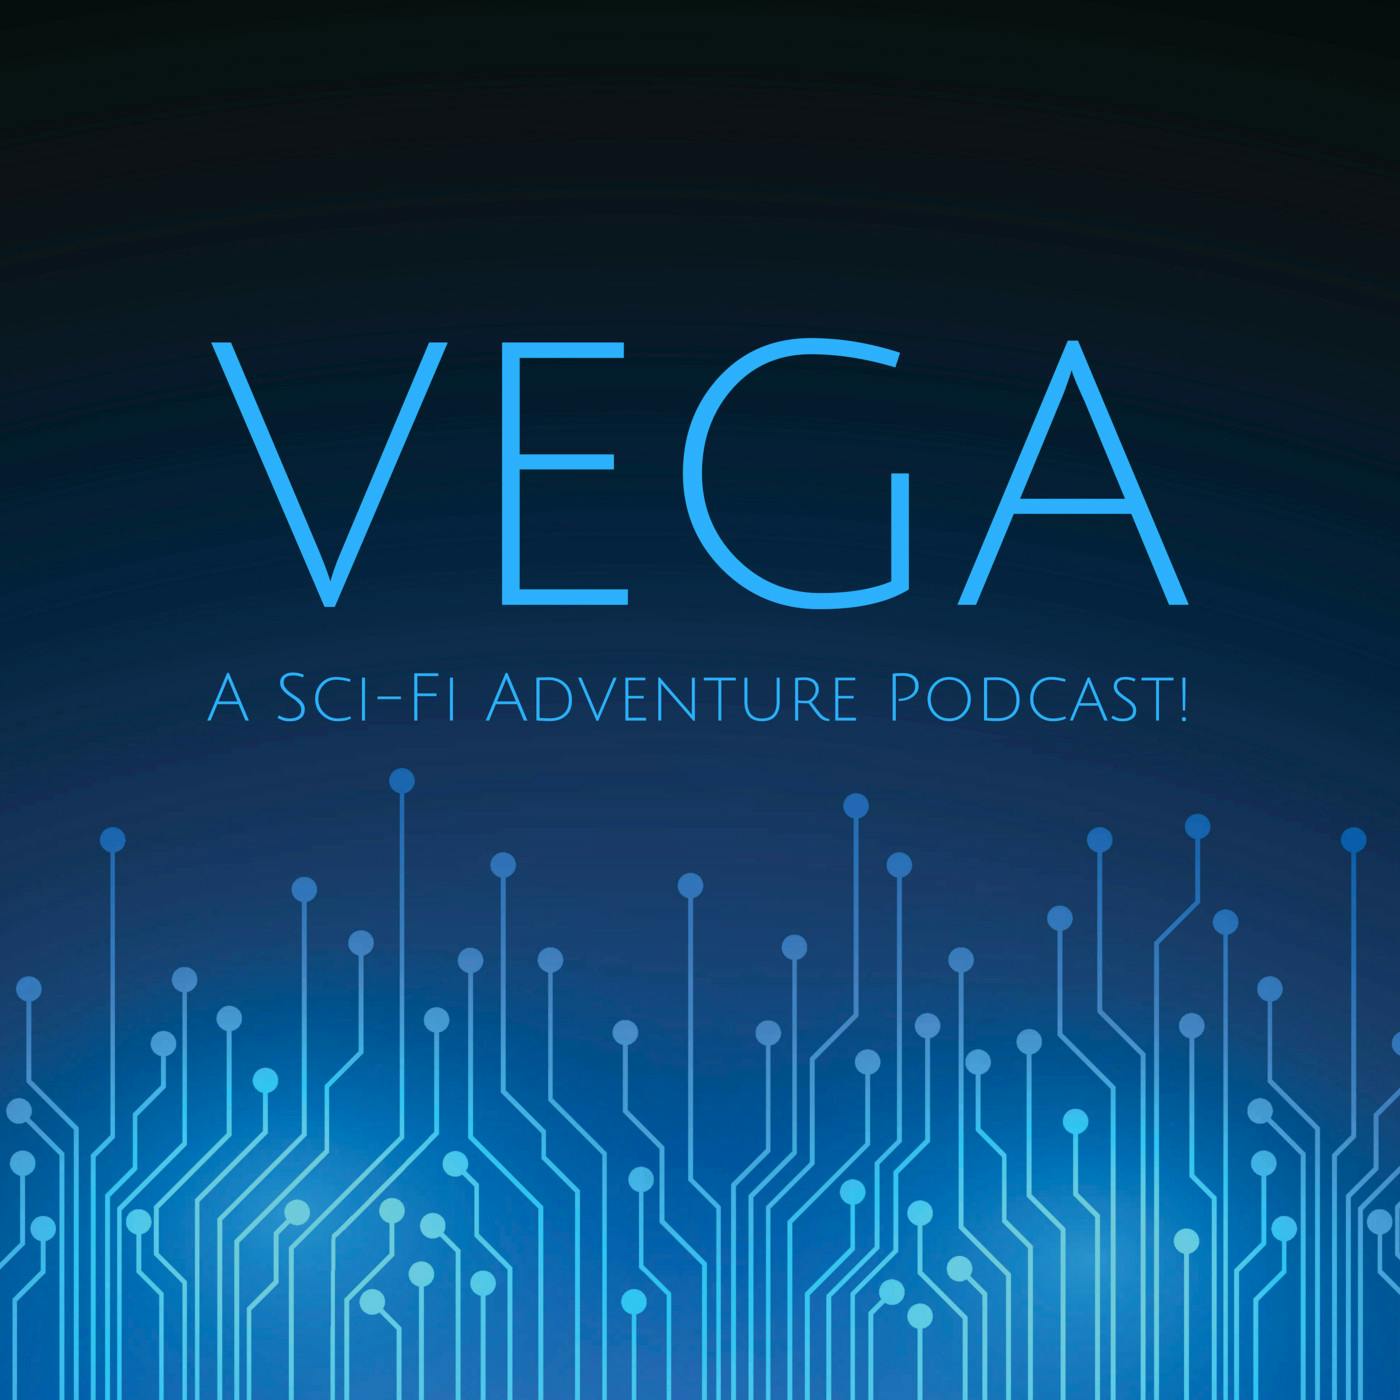 "Vega: A Sci-Fi Adventure Podcast!" Podcast